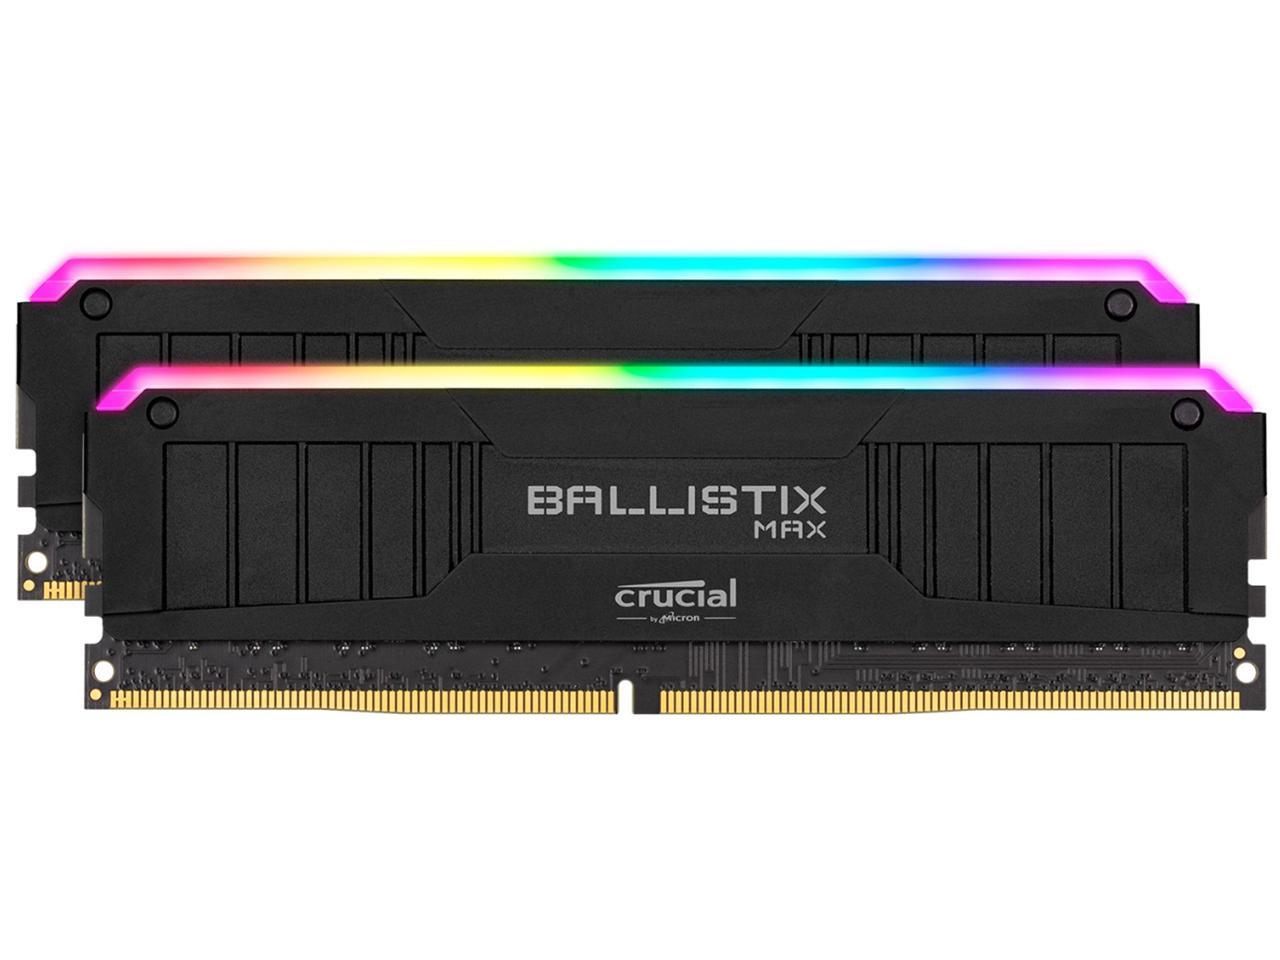 Used - Very Good: Crucial Ballistix MAX RGB 4400 MHz DDR4 DRAM Desktop Gaming Memory Kit 32GB